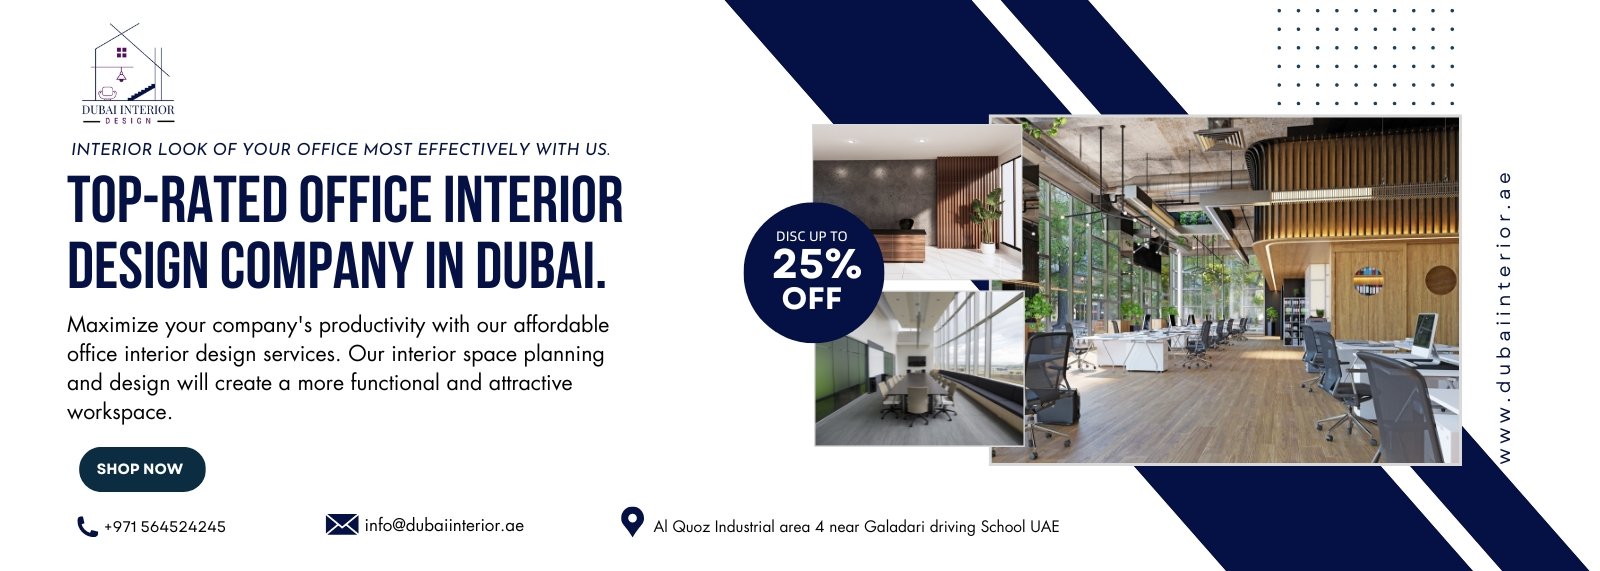 Top-rated Office Interior Design Company in Dubai